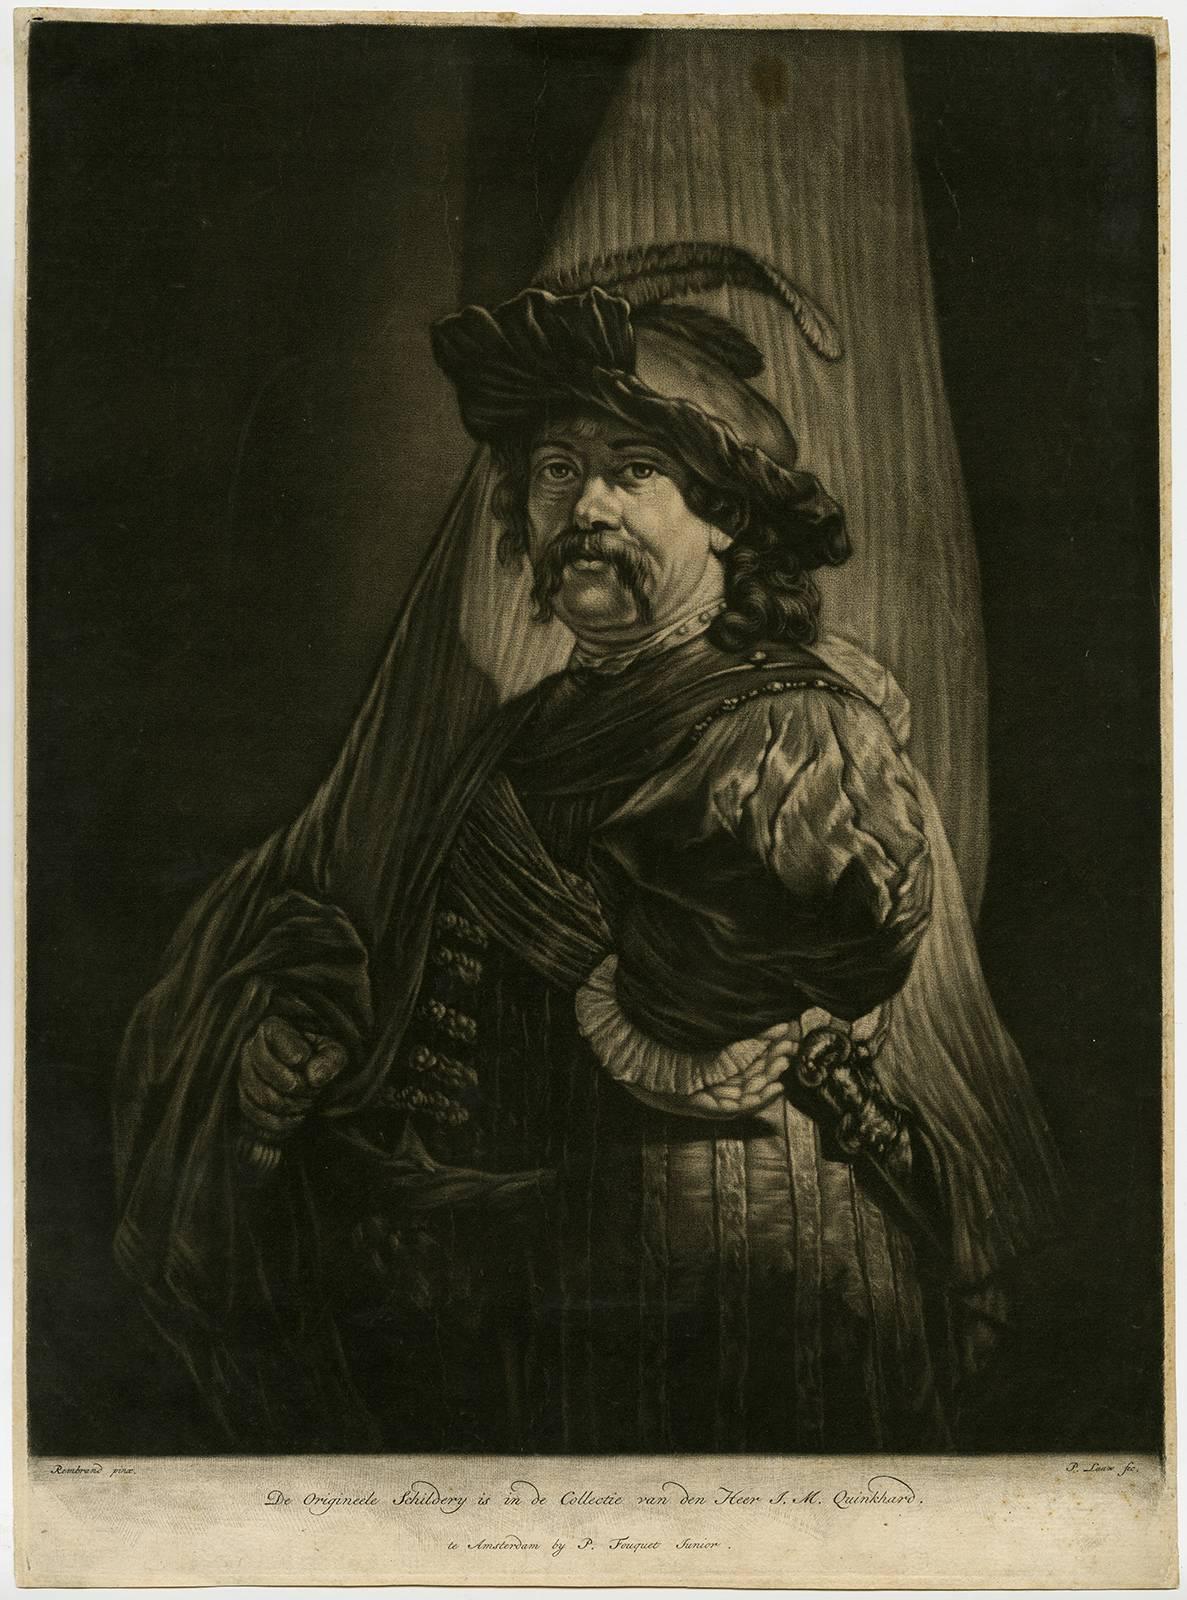 Pieter Louw Portrait Print - Untitled - The standardbearer.